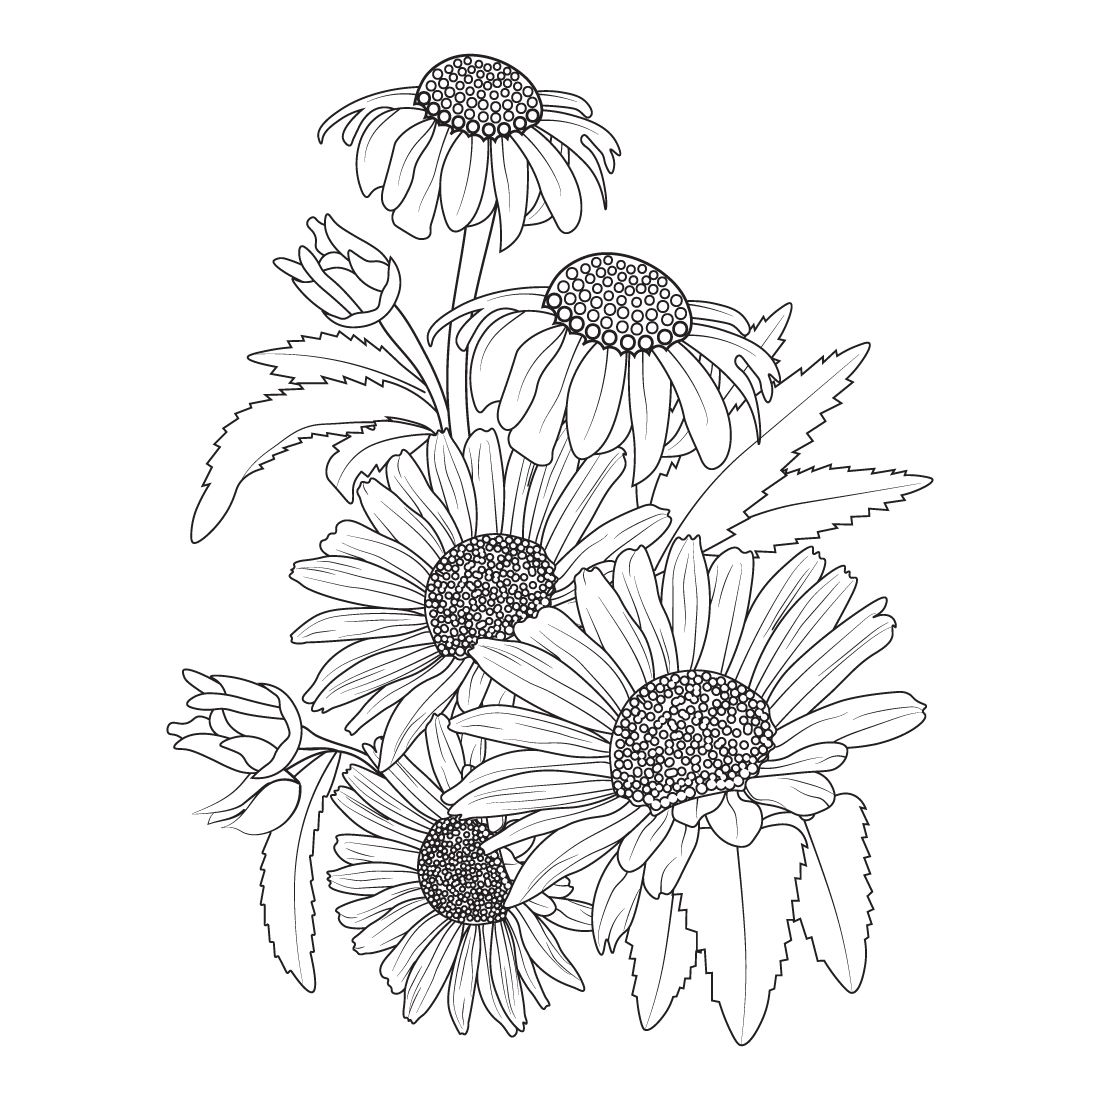 Daisy flower drawing tattoo line art Royalty Free Vector